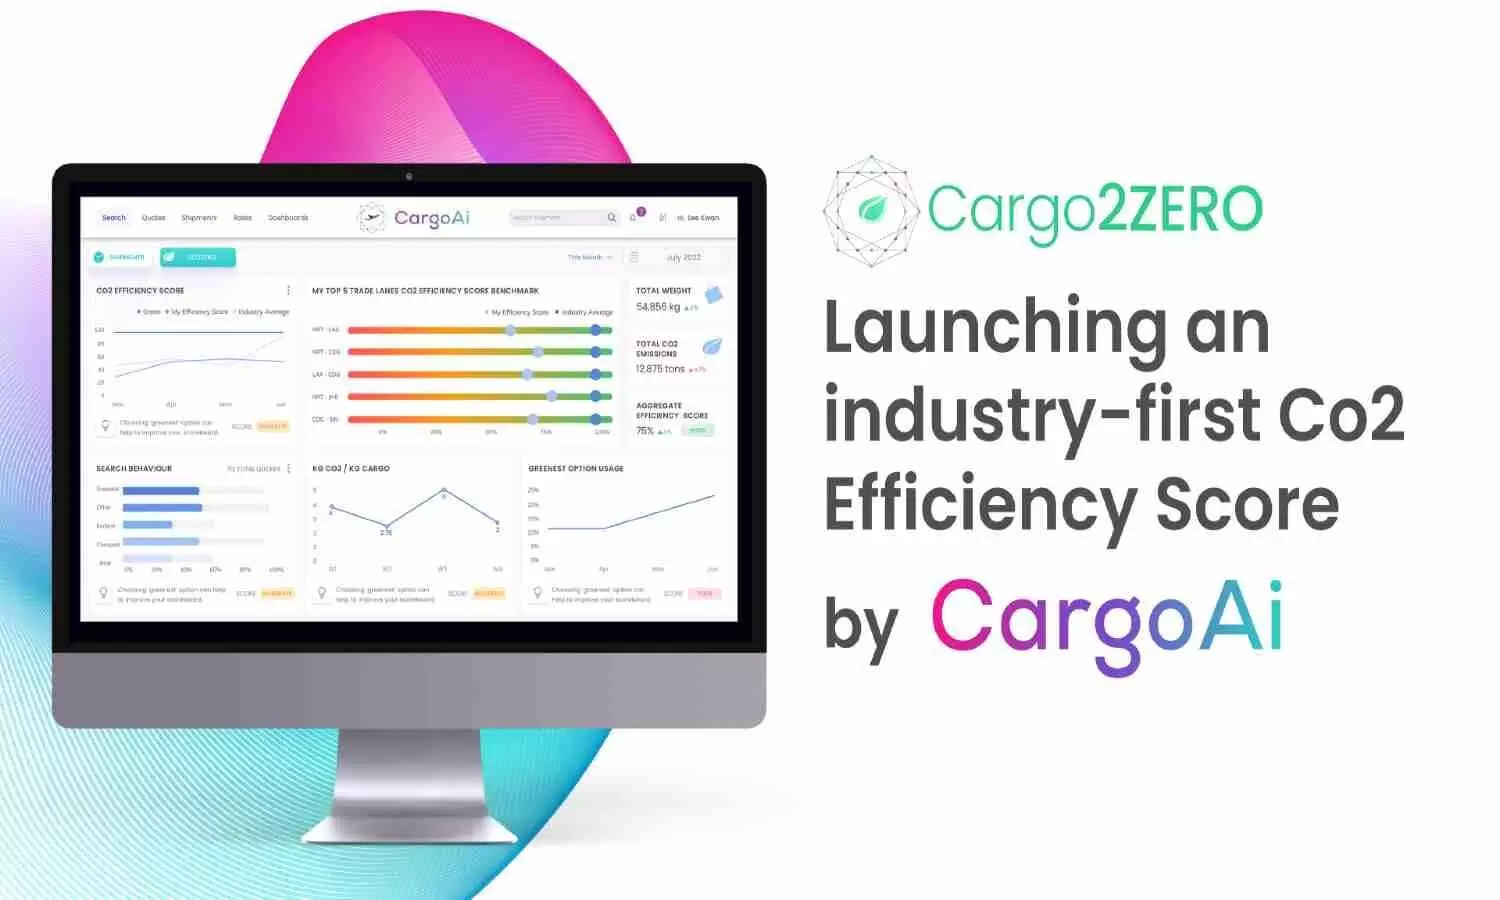 CargoAi launches CO2 Efficiency Score in its Cargo2ZERO solution